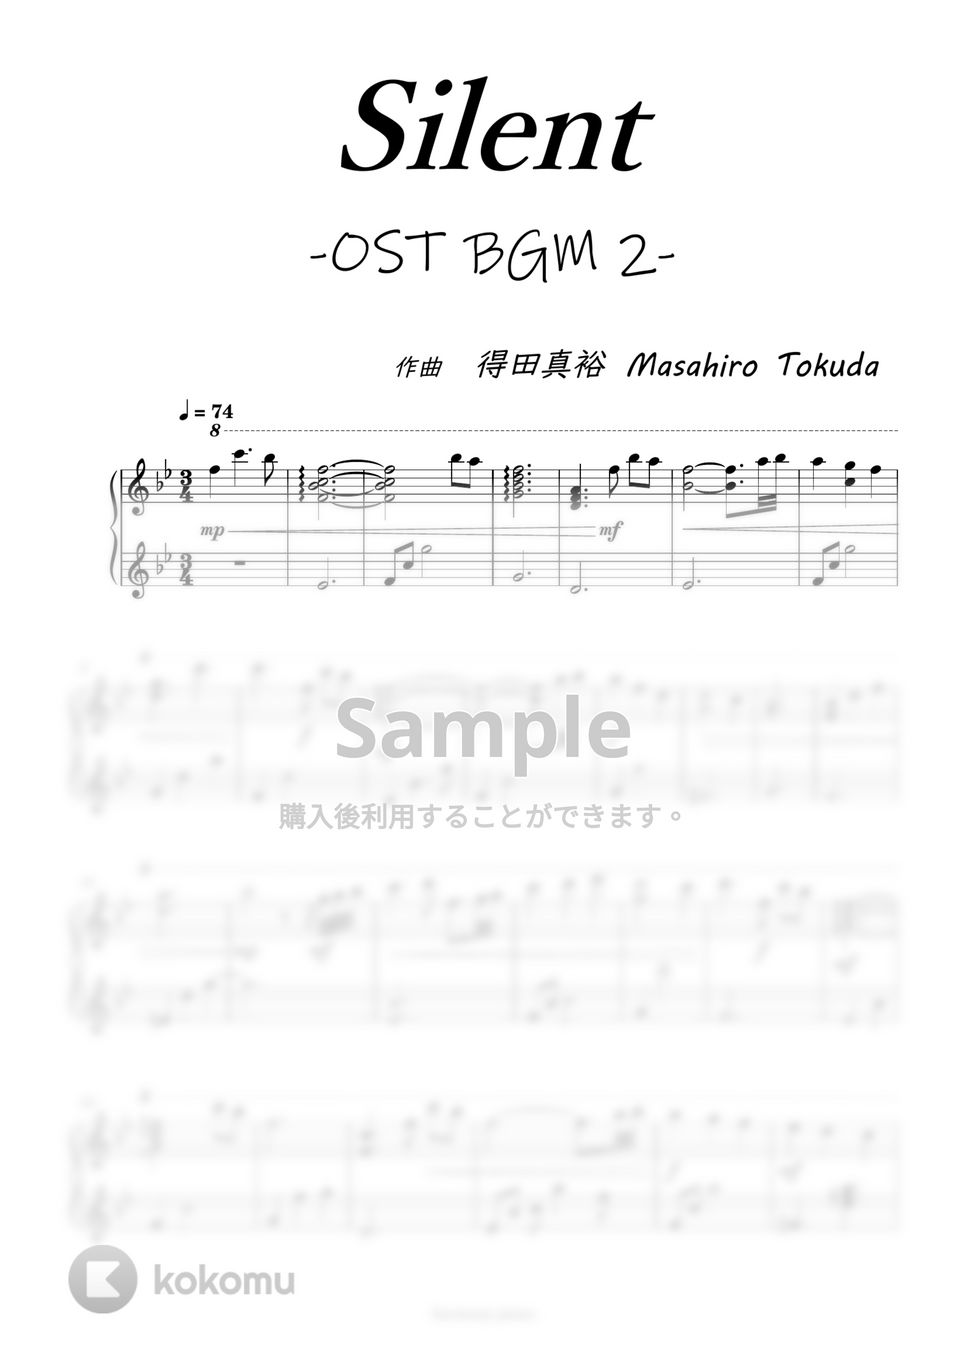 silent - BGM2曲「silent snow/愛おしい三角関係」 (目黒蓮/川口春奈) by harmony piano